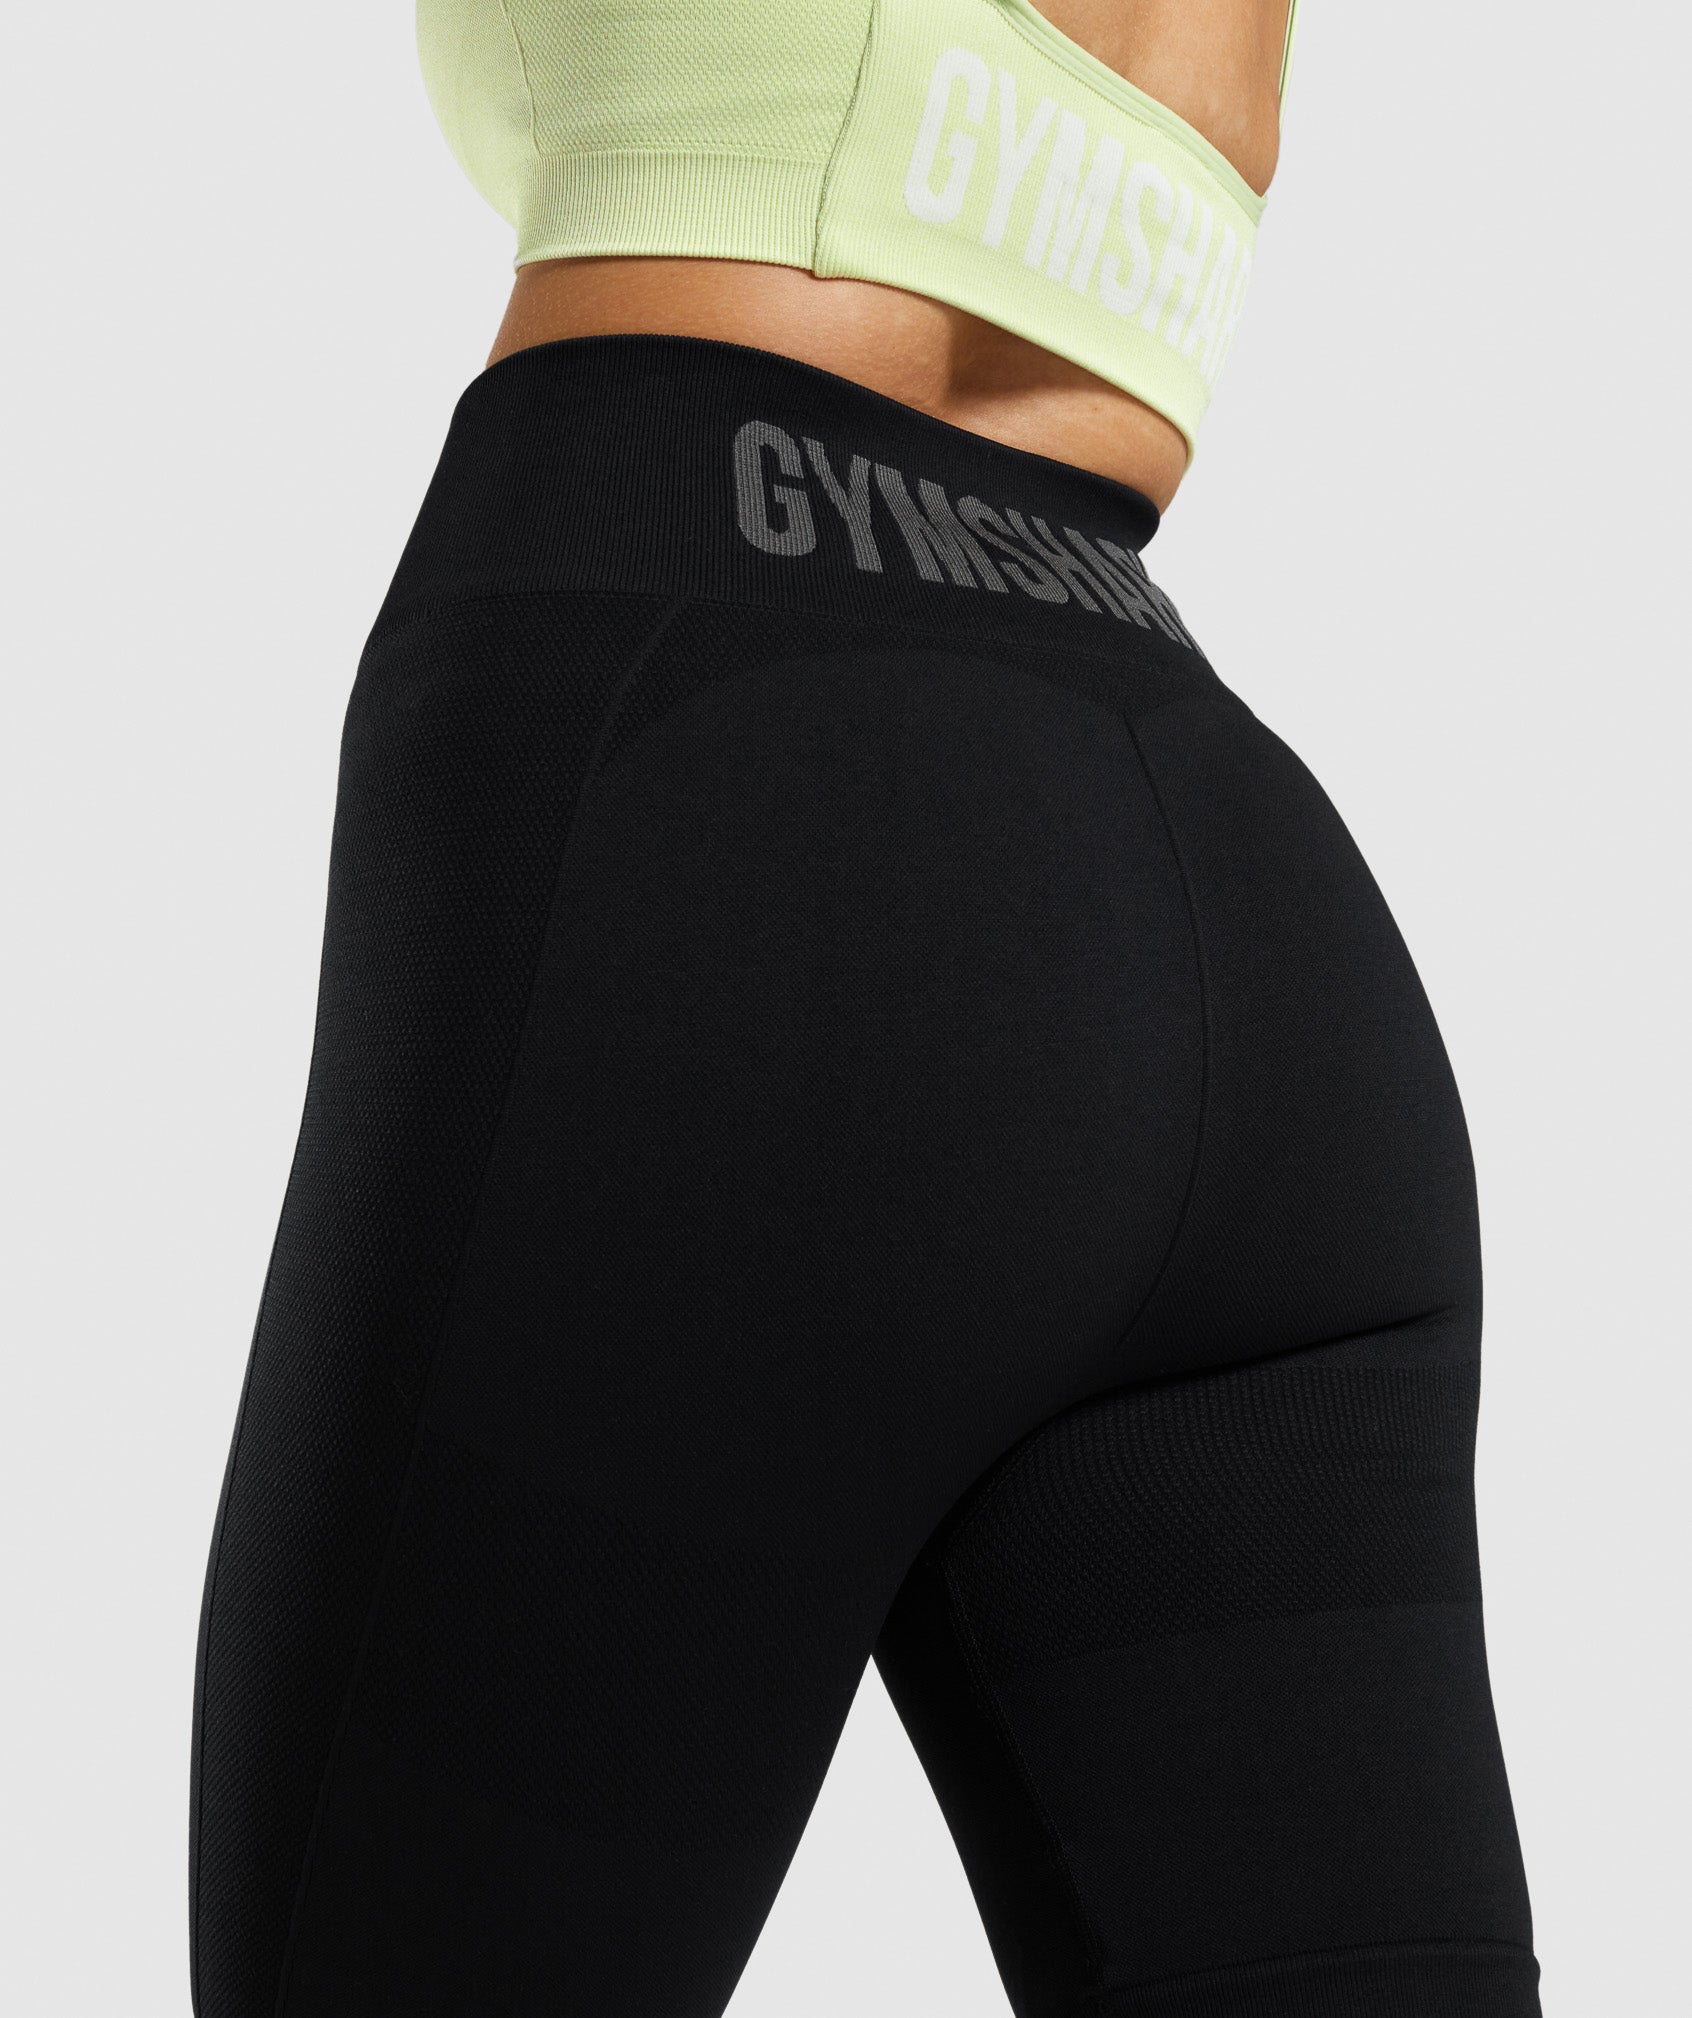 Gymshark Block Cycling Shorts - Black